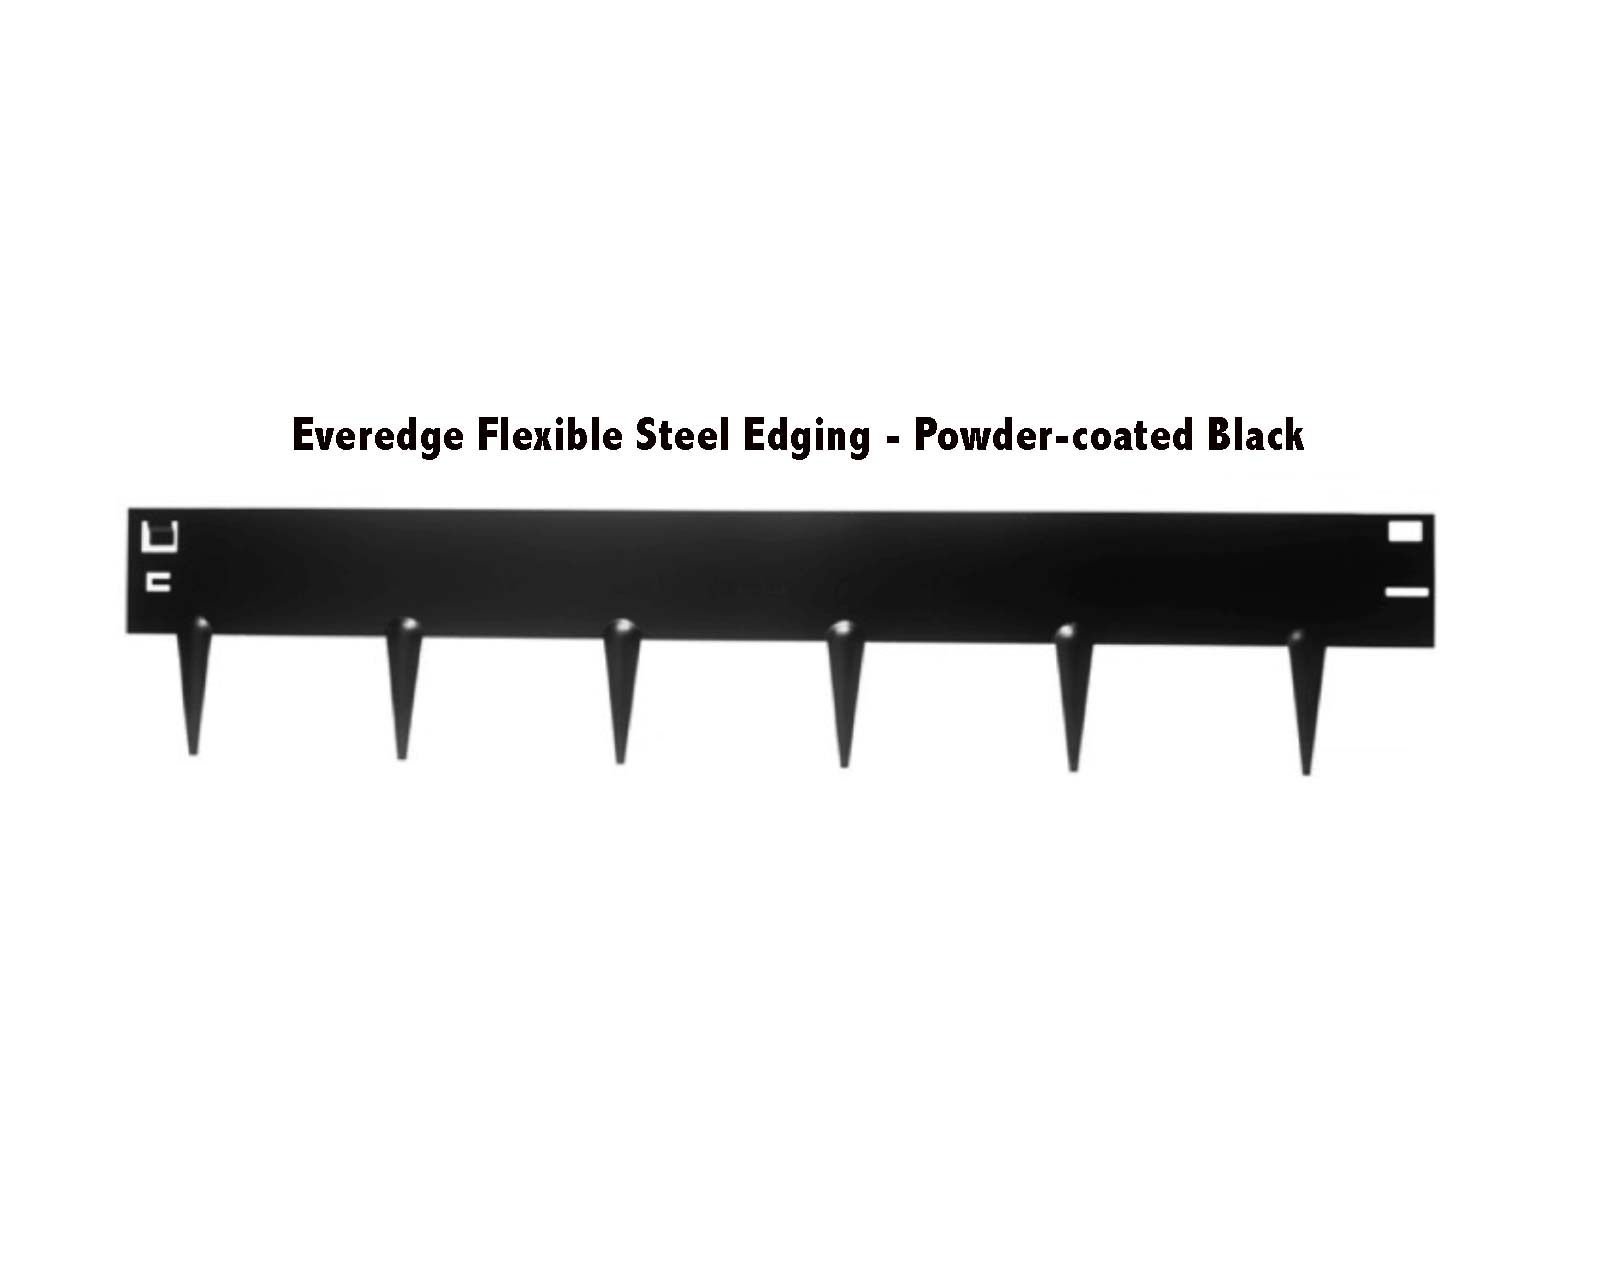 Everedge Flexible Steel Powder-coated edging in Black